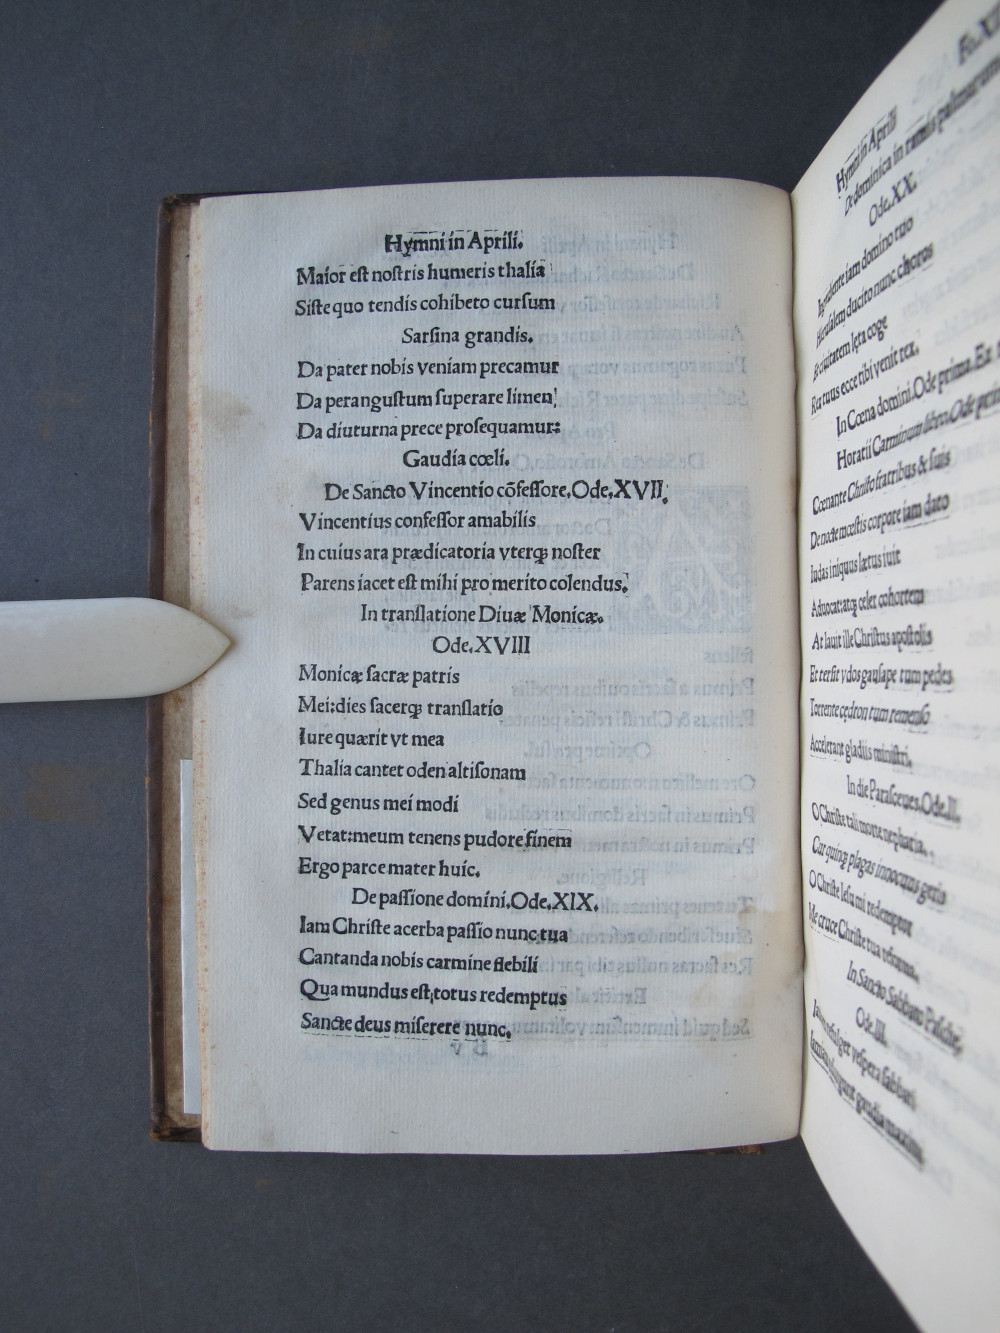 Folio 13 verso